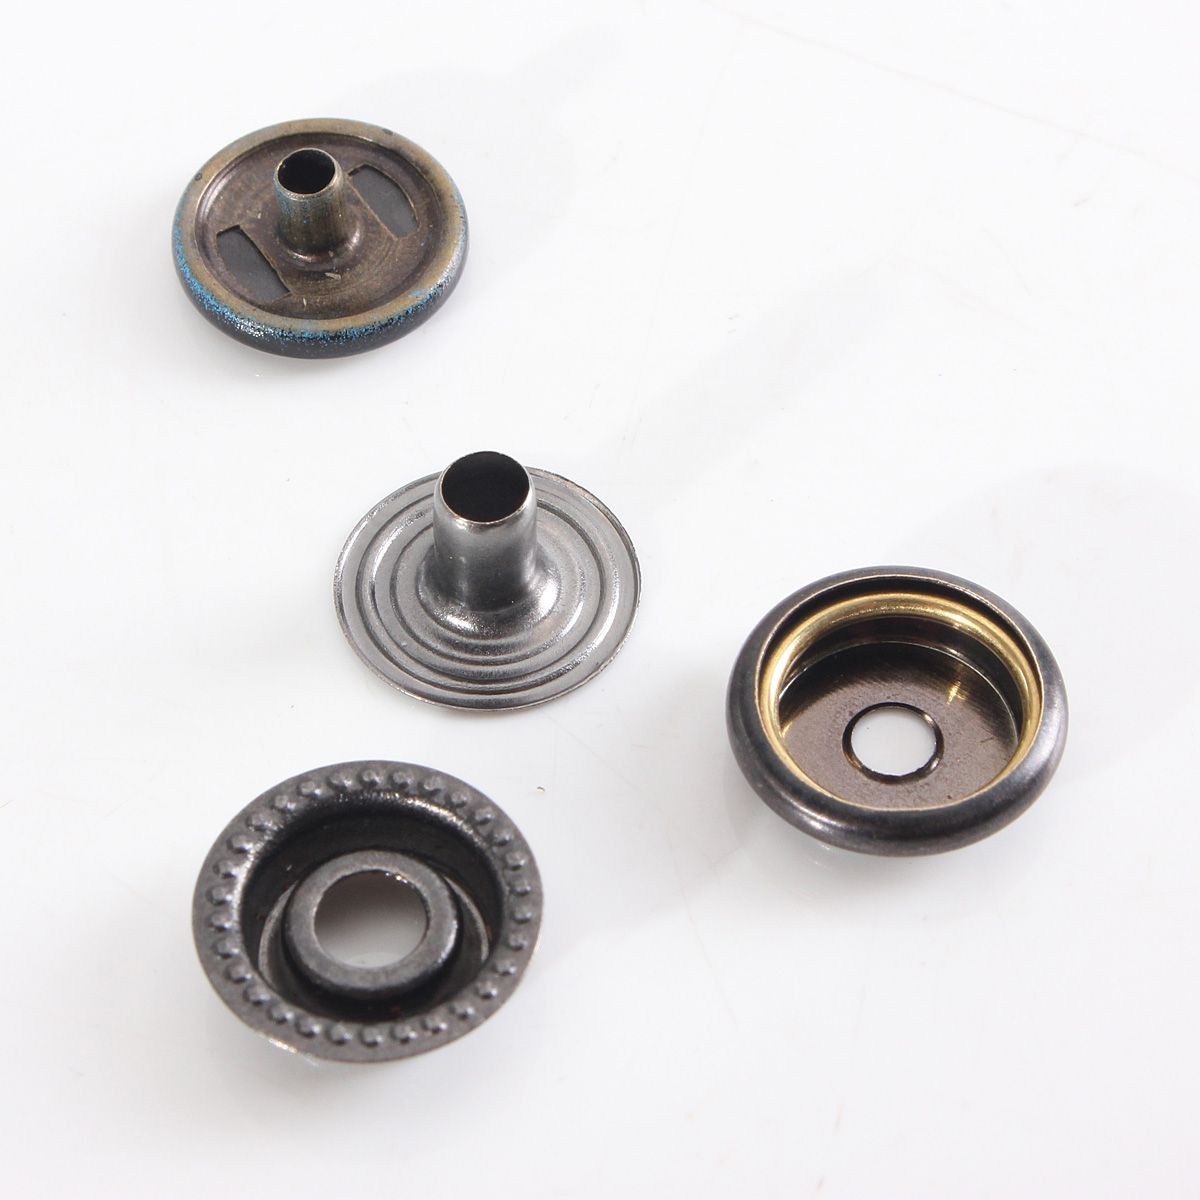 1517mm-Brass-Bronze-Snap-Fastener-Popper-Press-Stud-Rivet-Sewing-Leather-Buttons-Craft-1441904